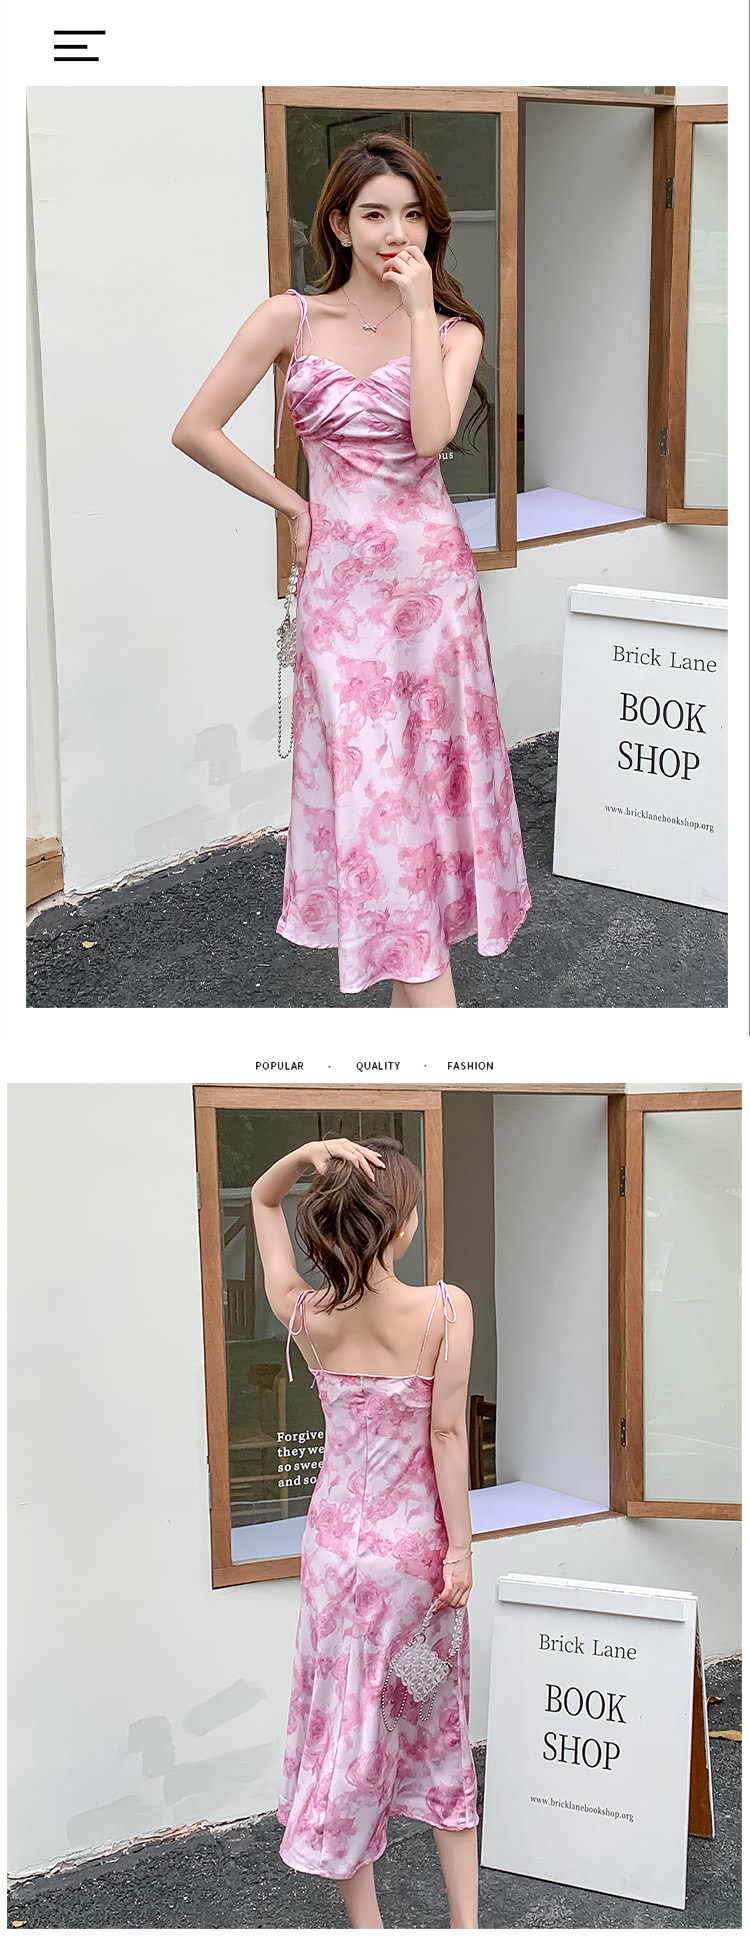 Sweet-Floral-Printed-Satin-Summer-Casual-Slip-Dress-Beach-Wear19